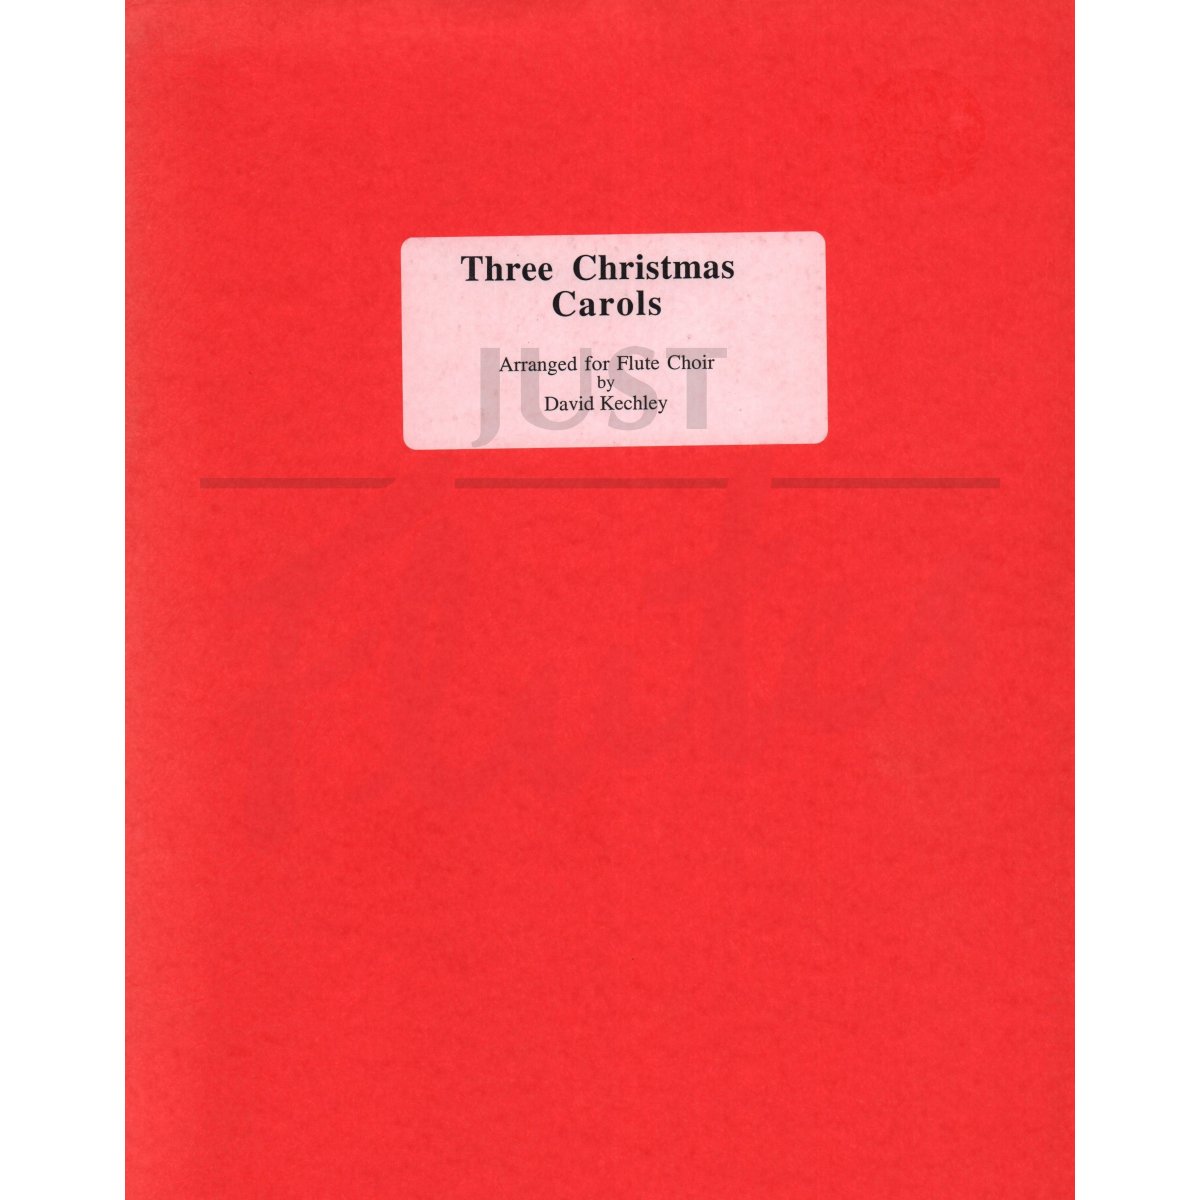 Three Christmas Carols for Flute Choir